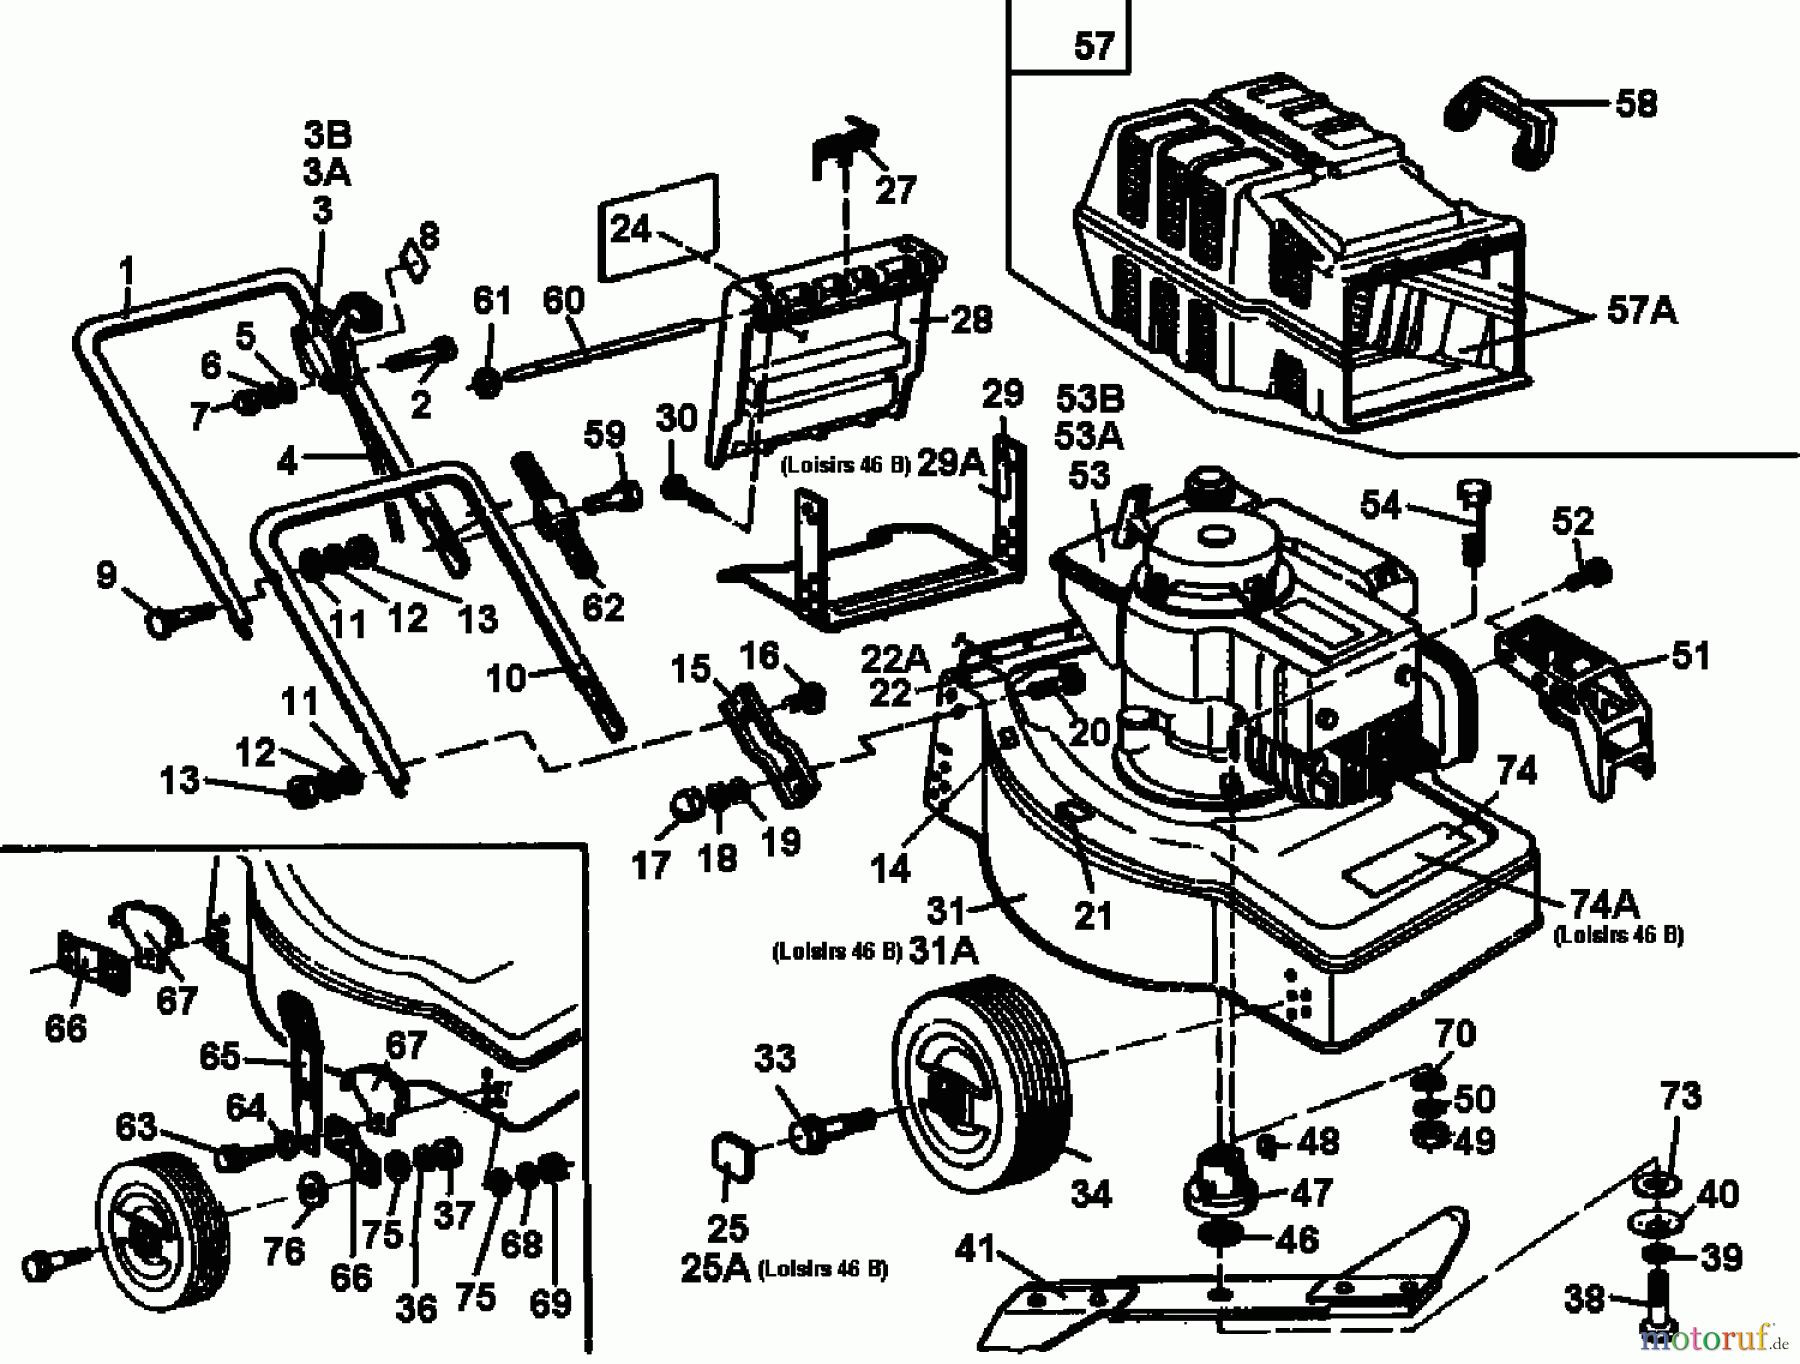  Diana Petrol mower 45 B 02813.01  (1991) Basic machine